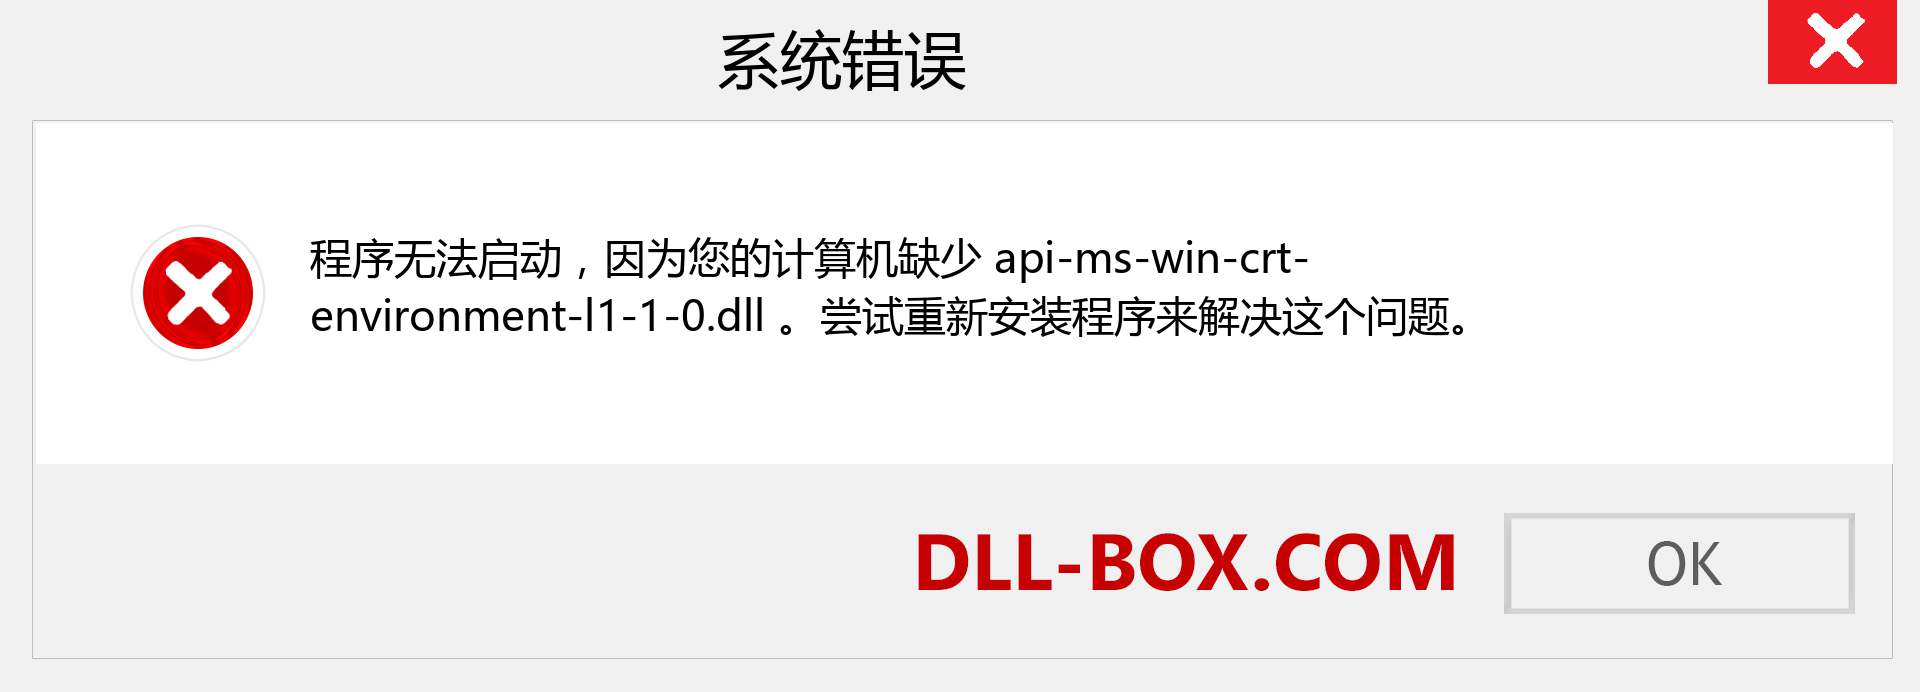 api-ms-win-crt-environment-l1-1-0.dll 文件丢失？。 适用于 Windows 7、8、10 的下载 - 修复 Windows、照片、图像上的 api-ms-win-crt-environment-l1-1-0 dll 丢失错误